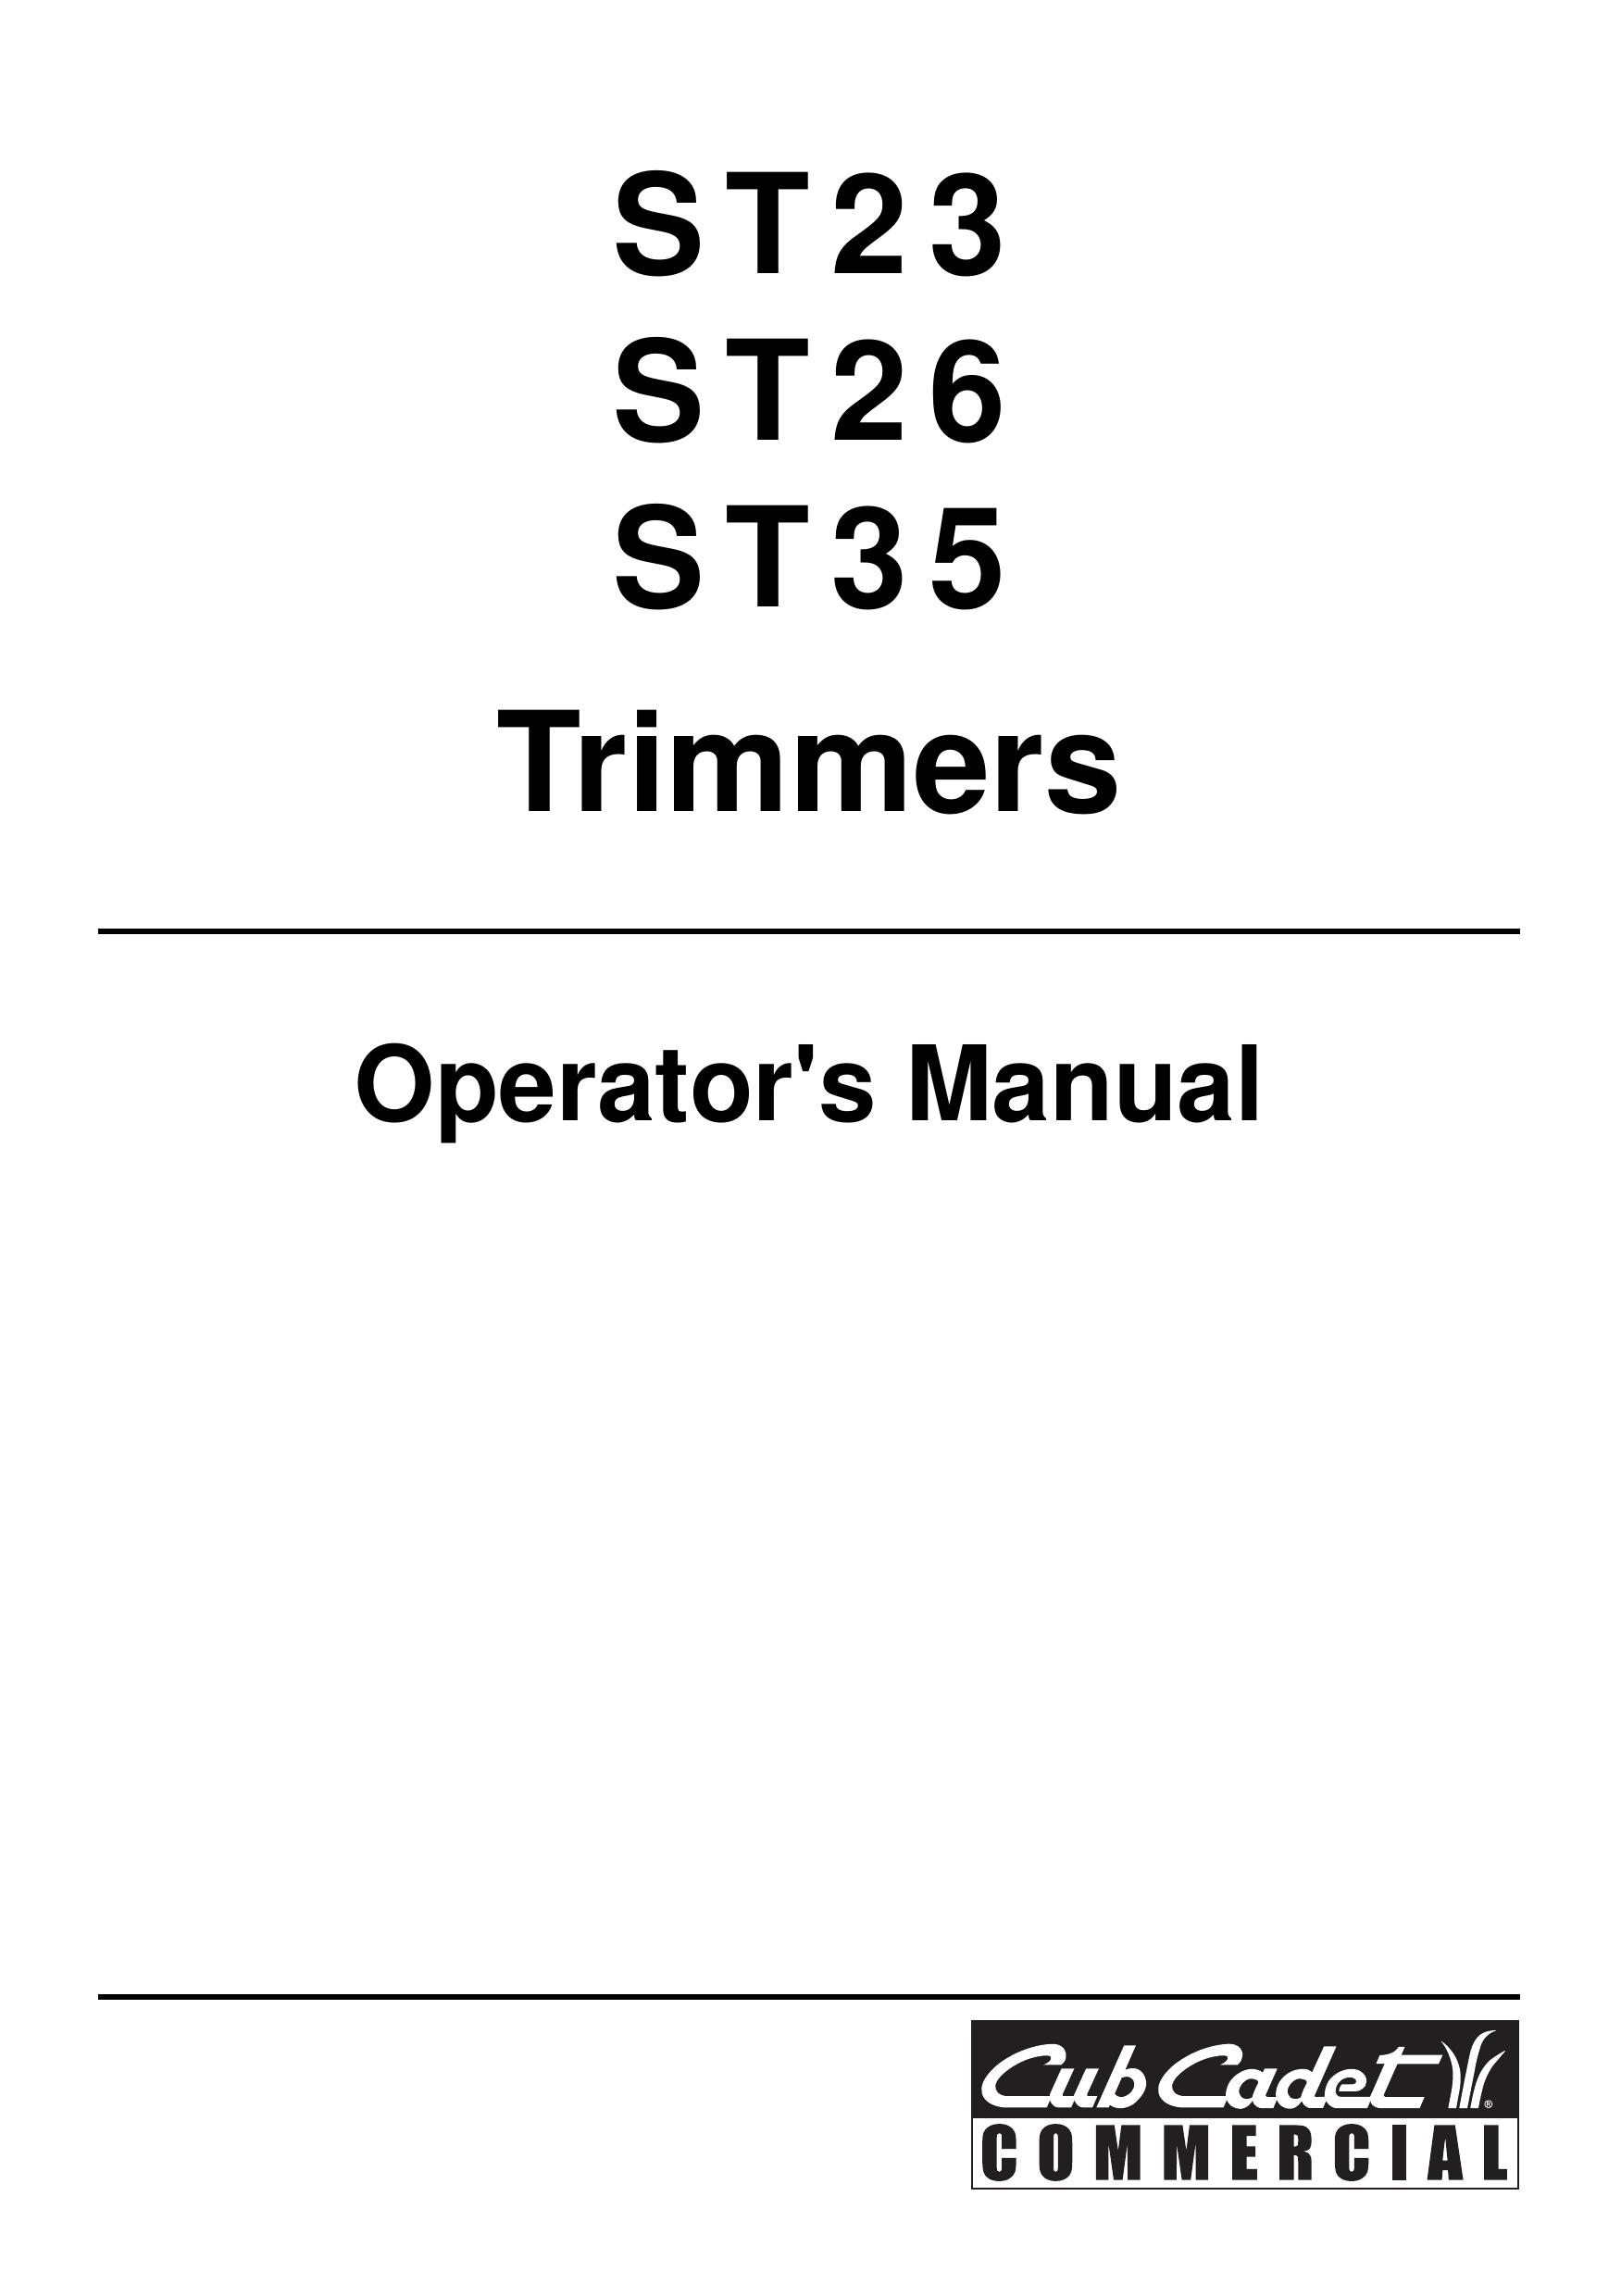 Cub Cadet ST26 Trimmer User Manual